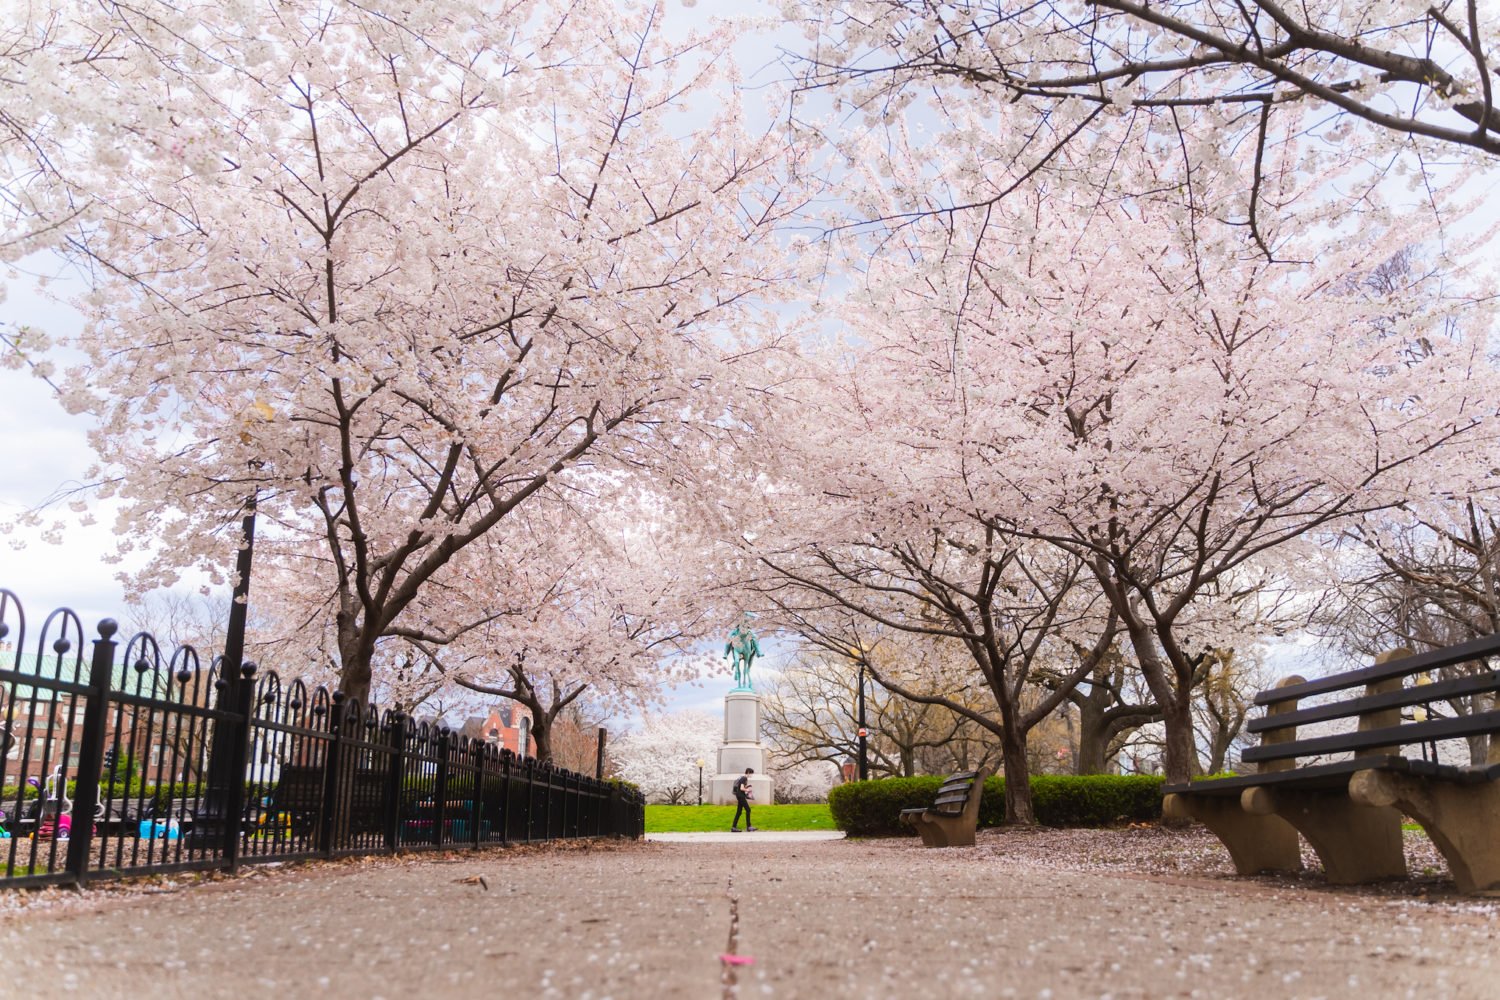 Cherry blossoms in Stanton Park. Photo courtesy of Washington.org.